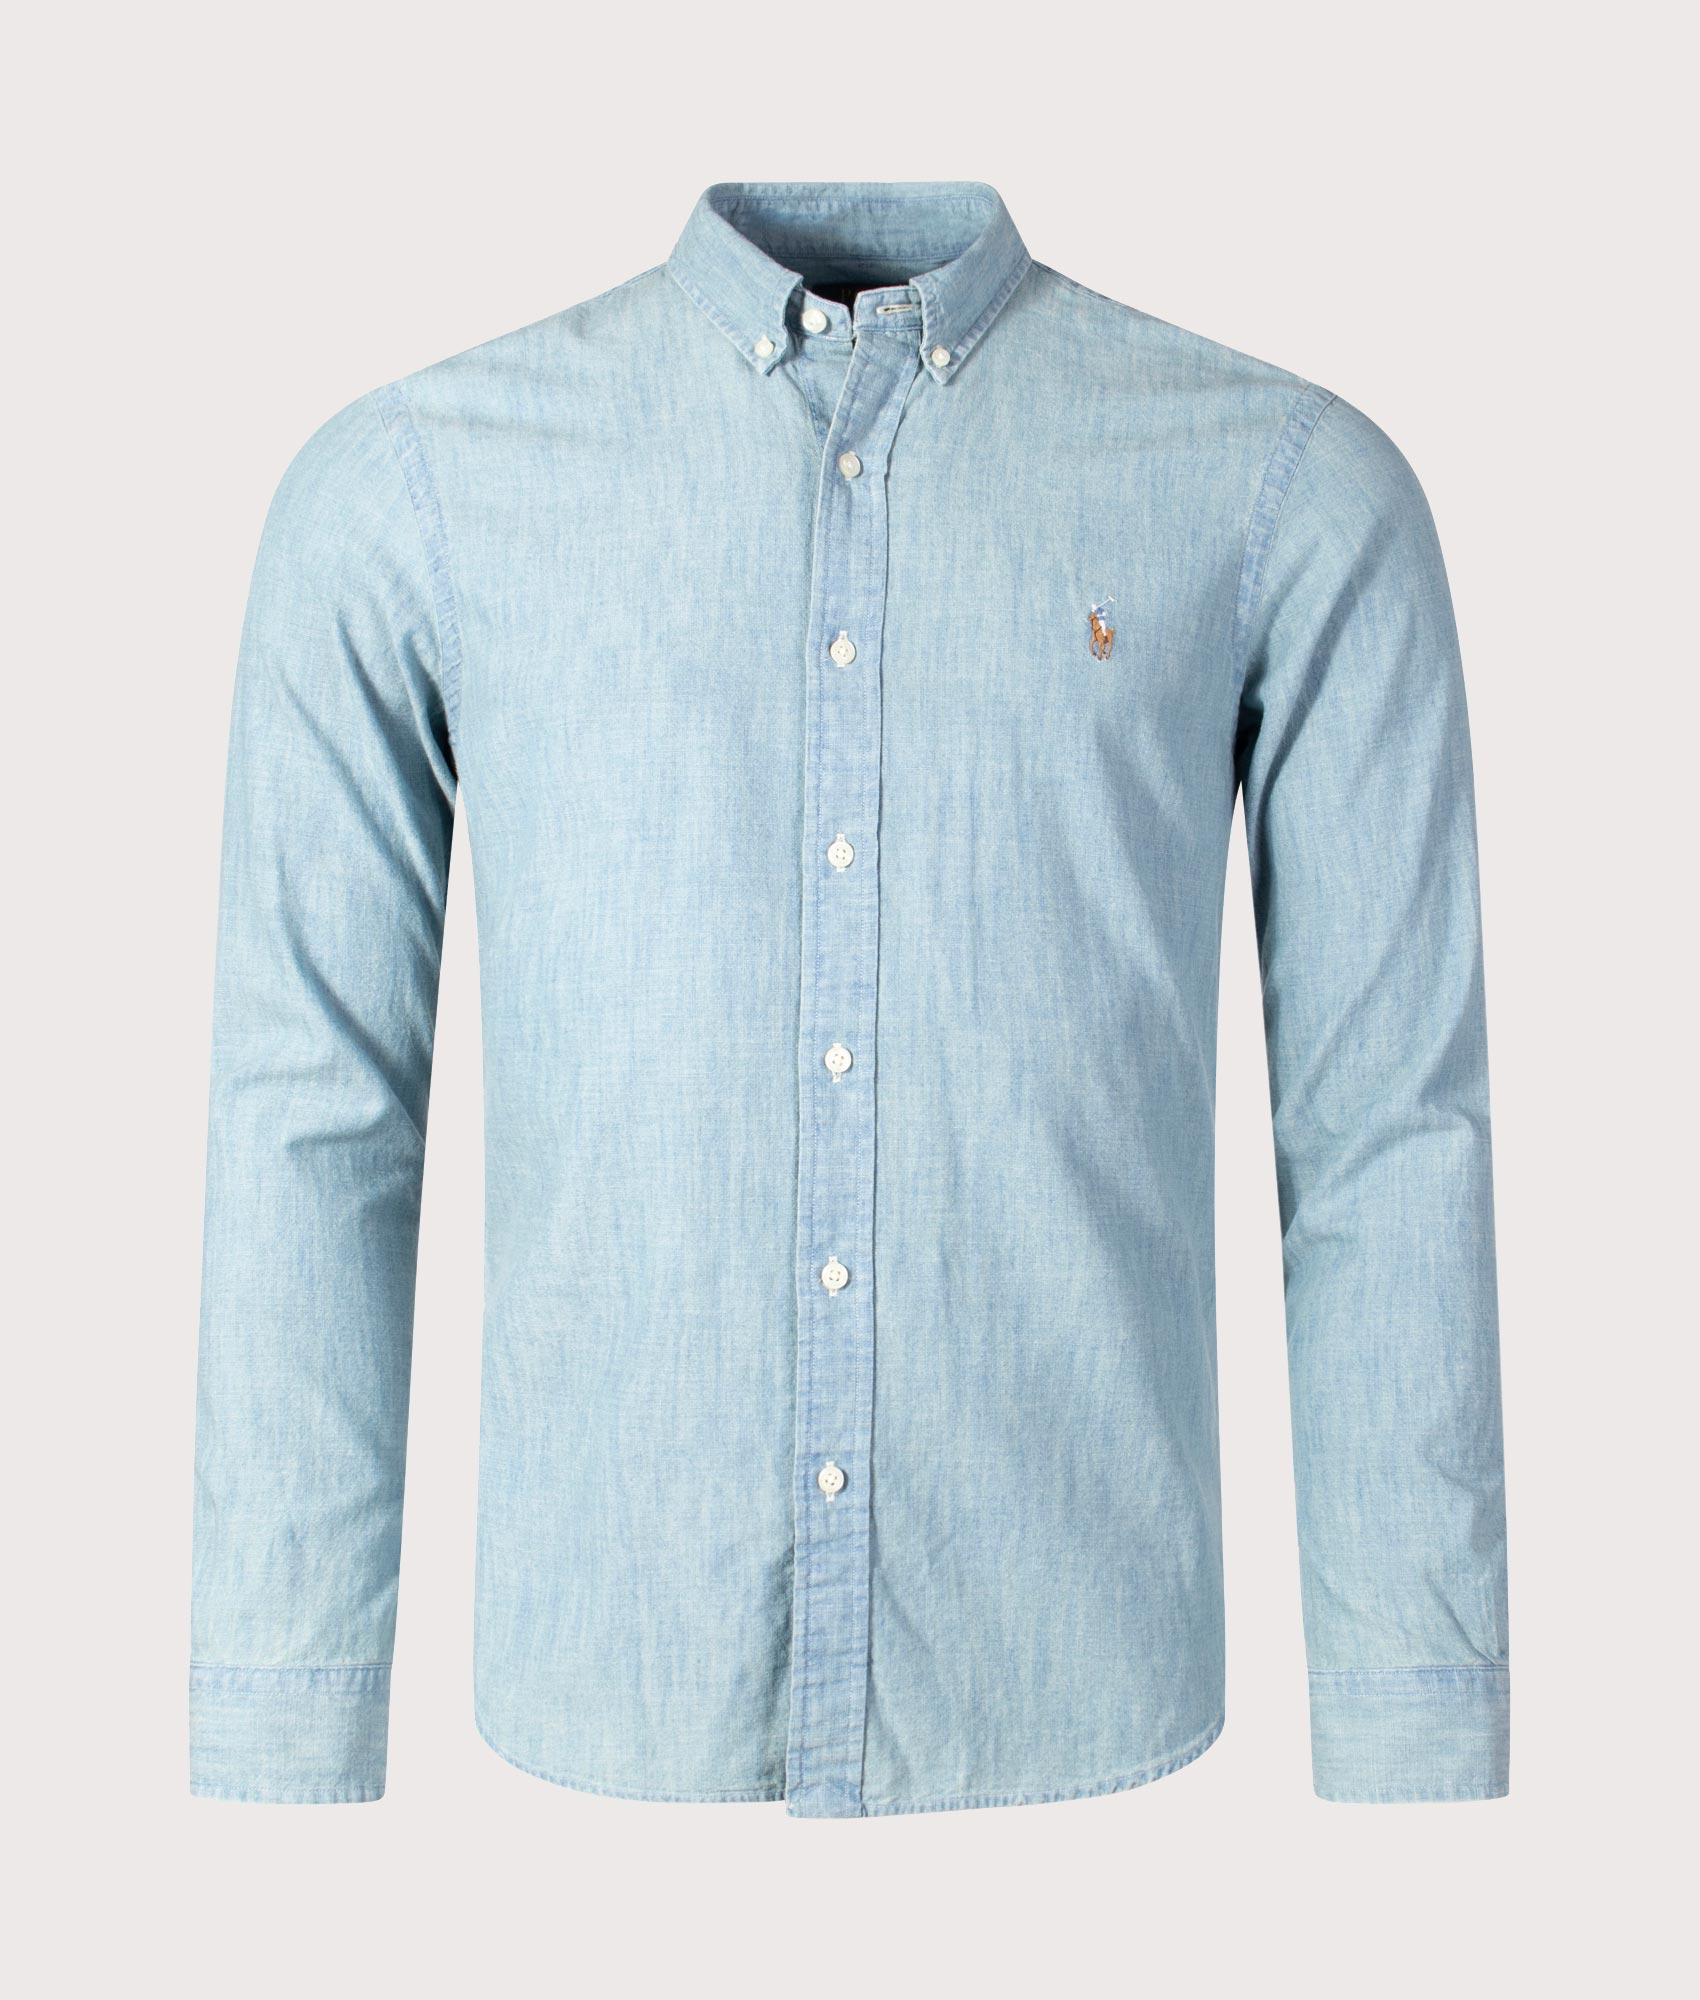 Polo Ralph Lauren Mens Slim Fit Chambray Shirt - Colour: 001 Chambray - Size: Medium